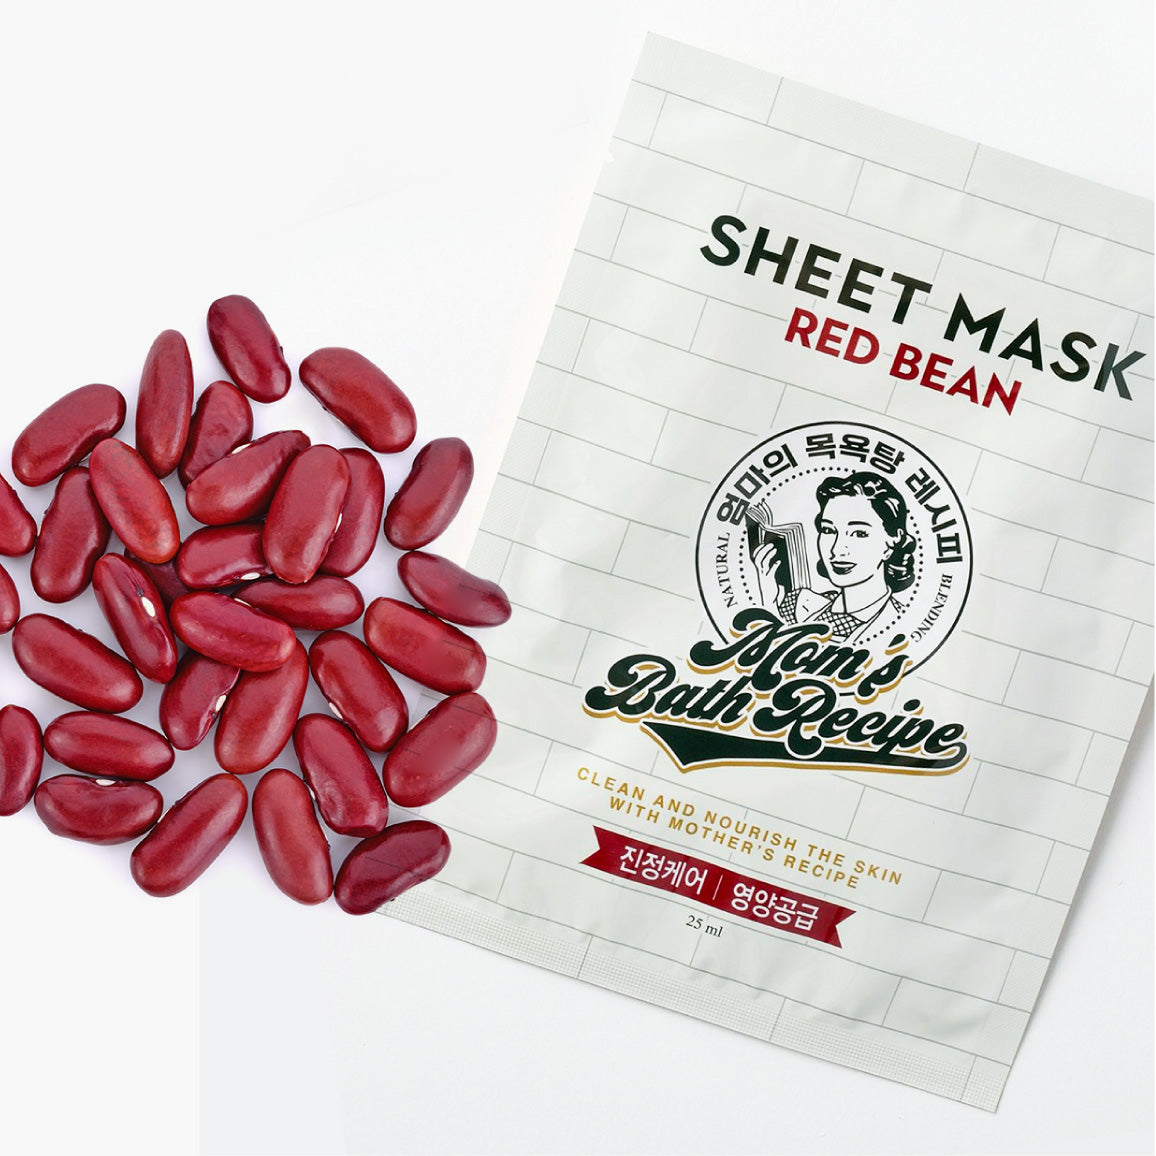 Mom's Bath - Red Bean Sheet Mask - 1 Sheet